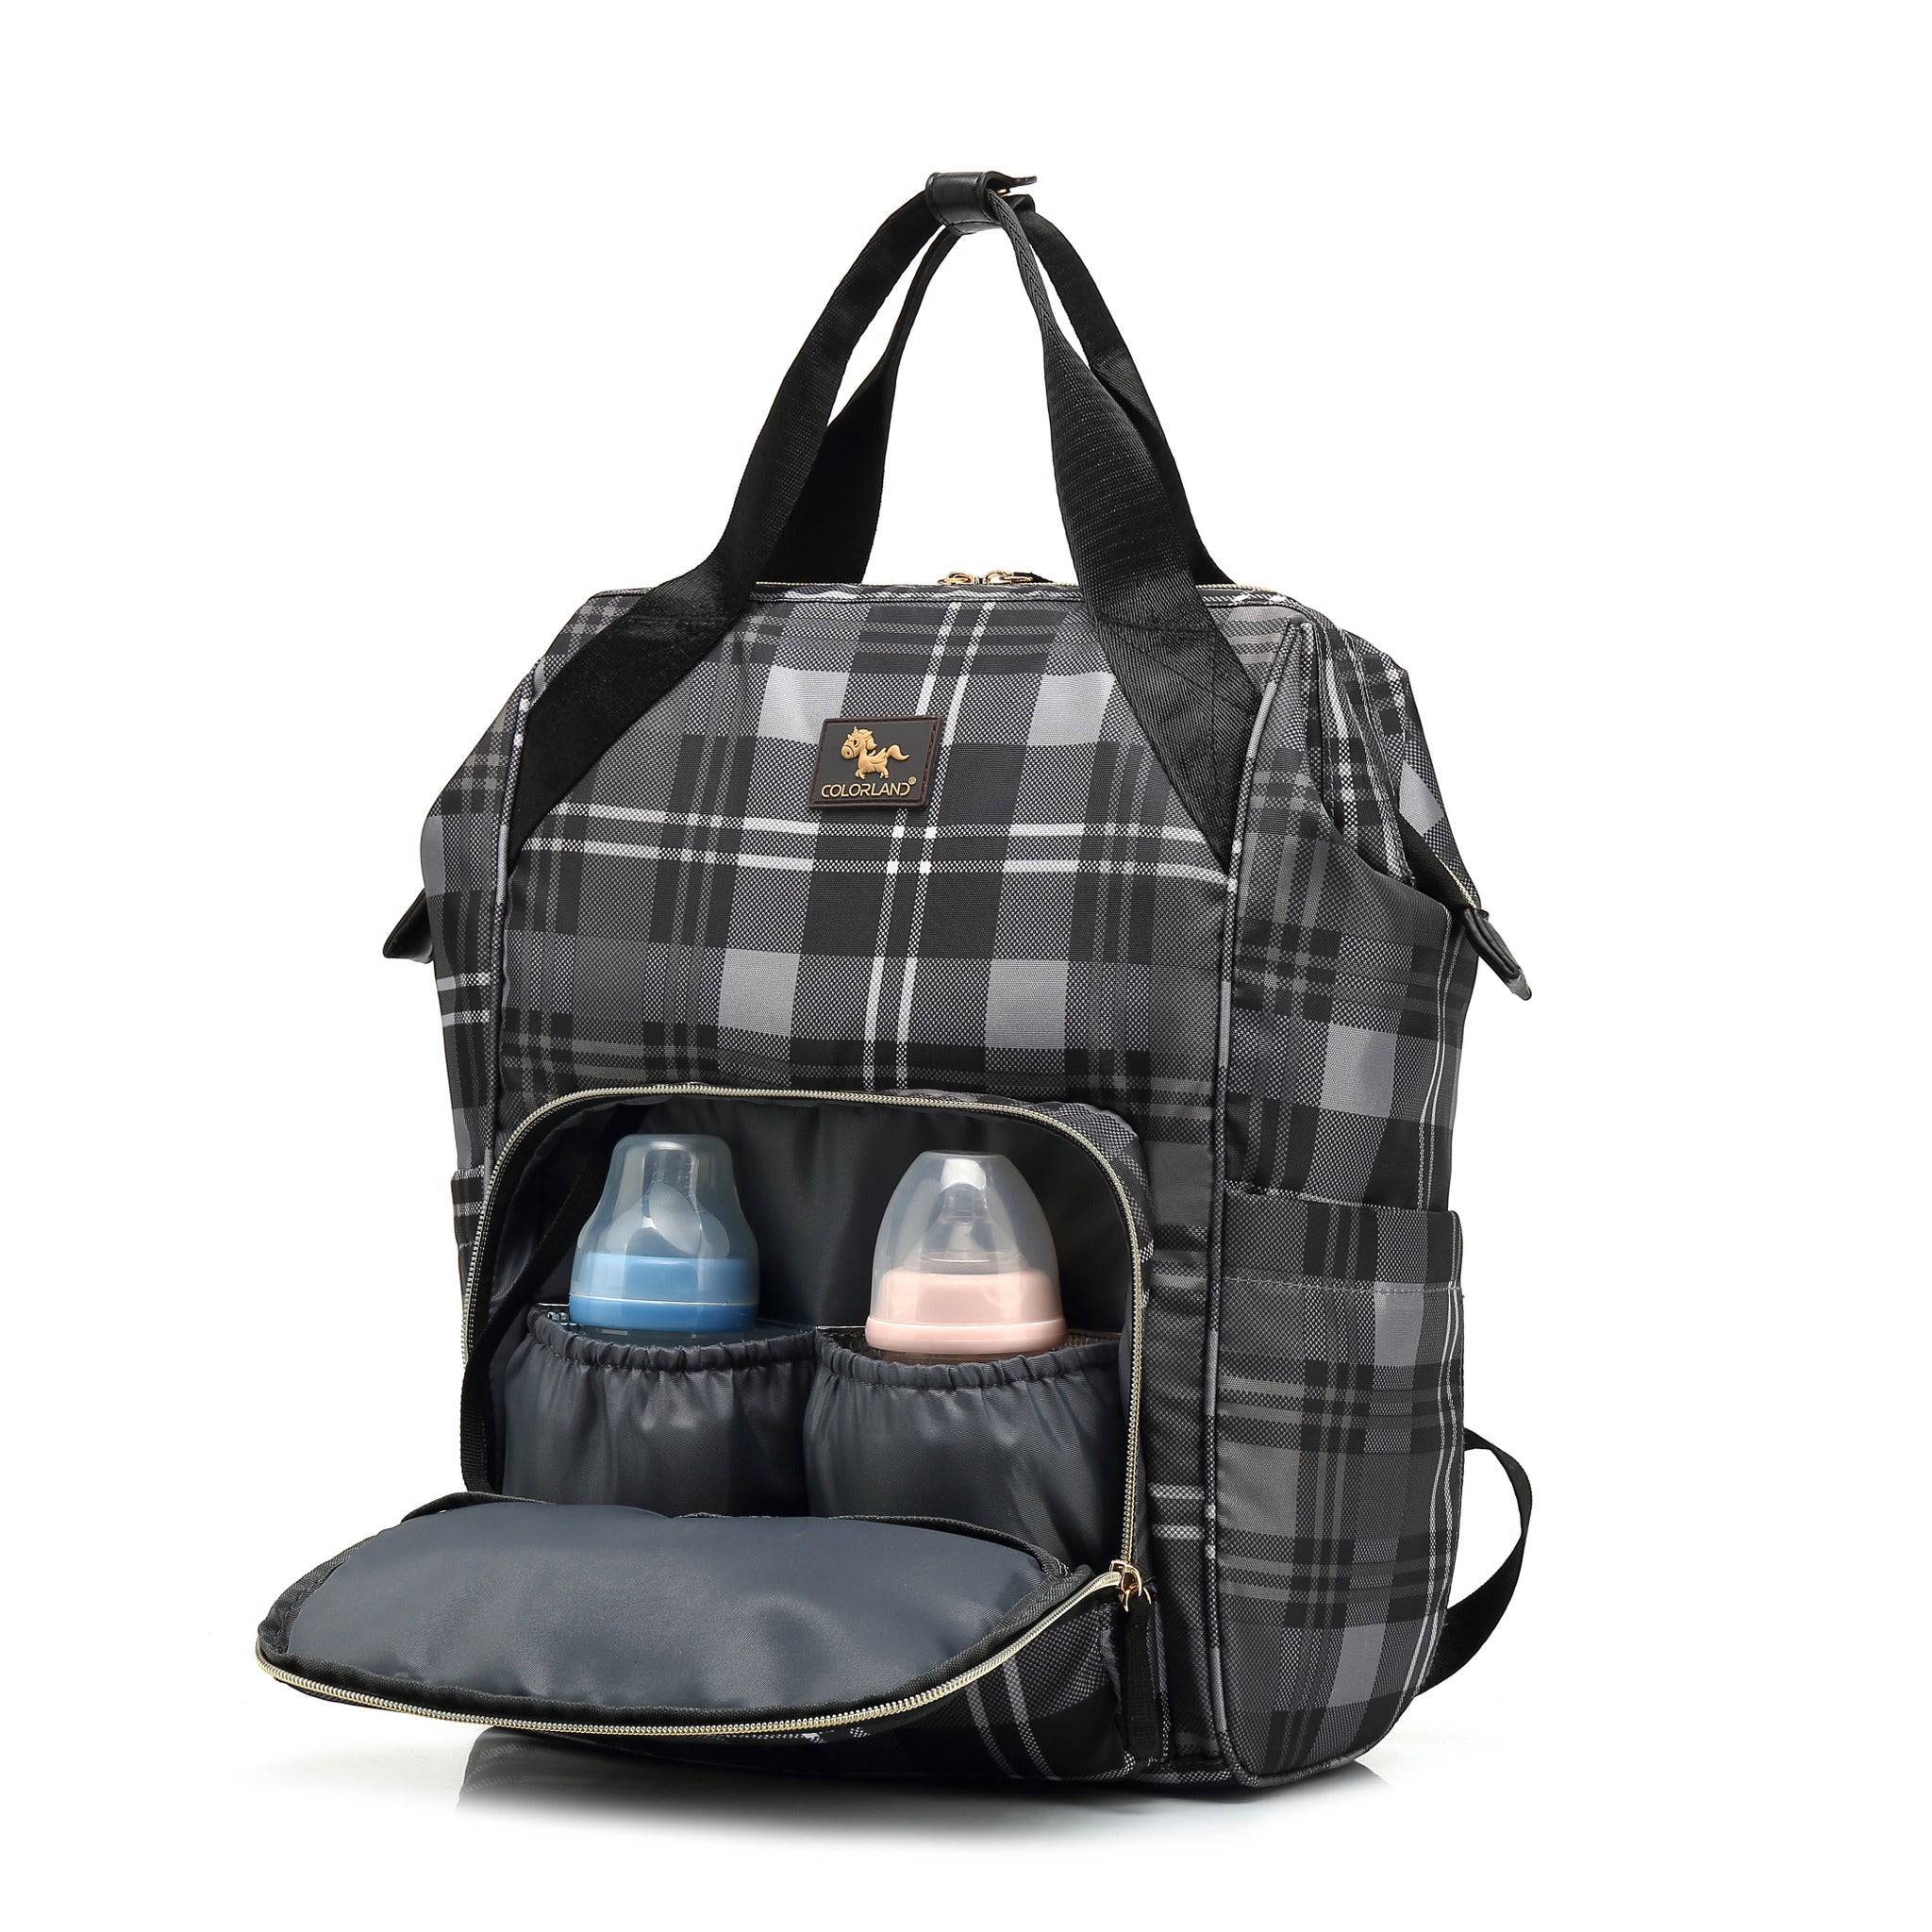 Bolide Backpack